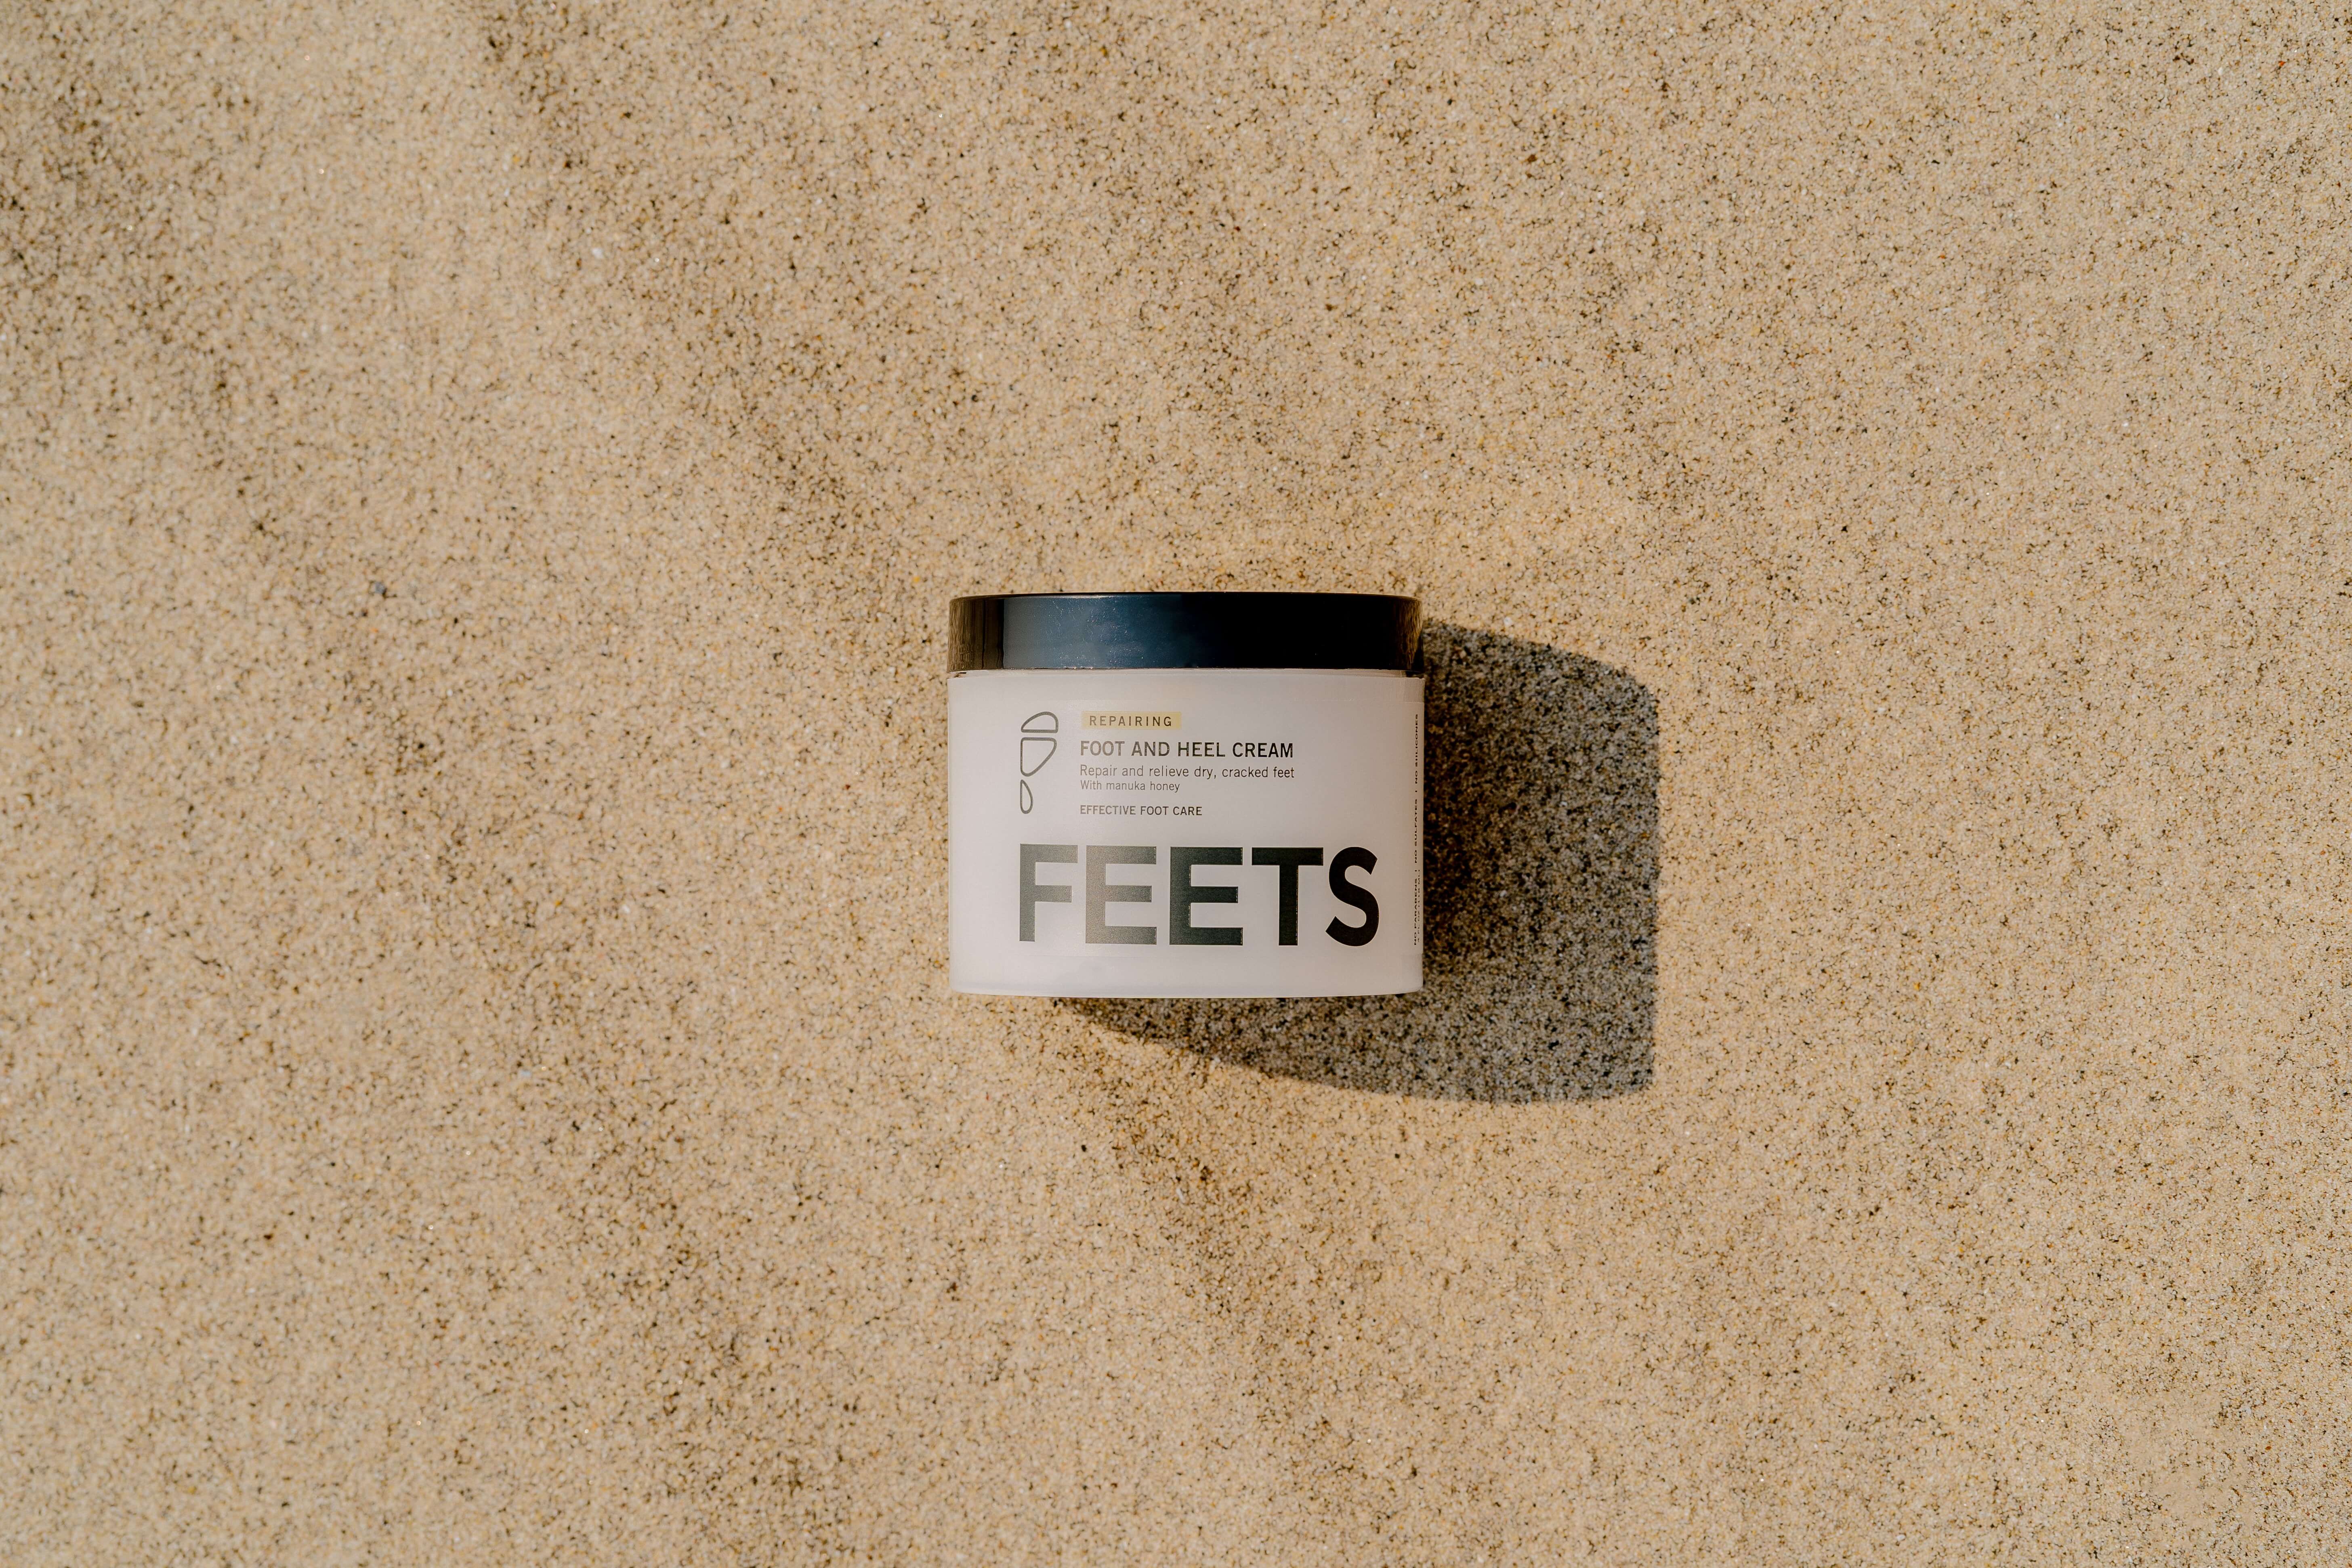 Foot and heal cream on beach